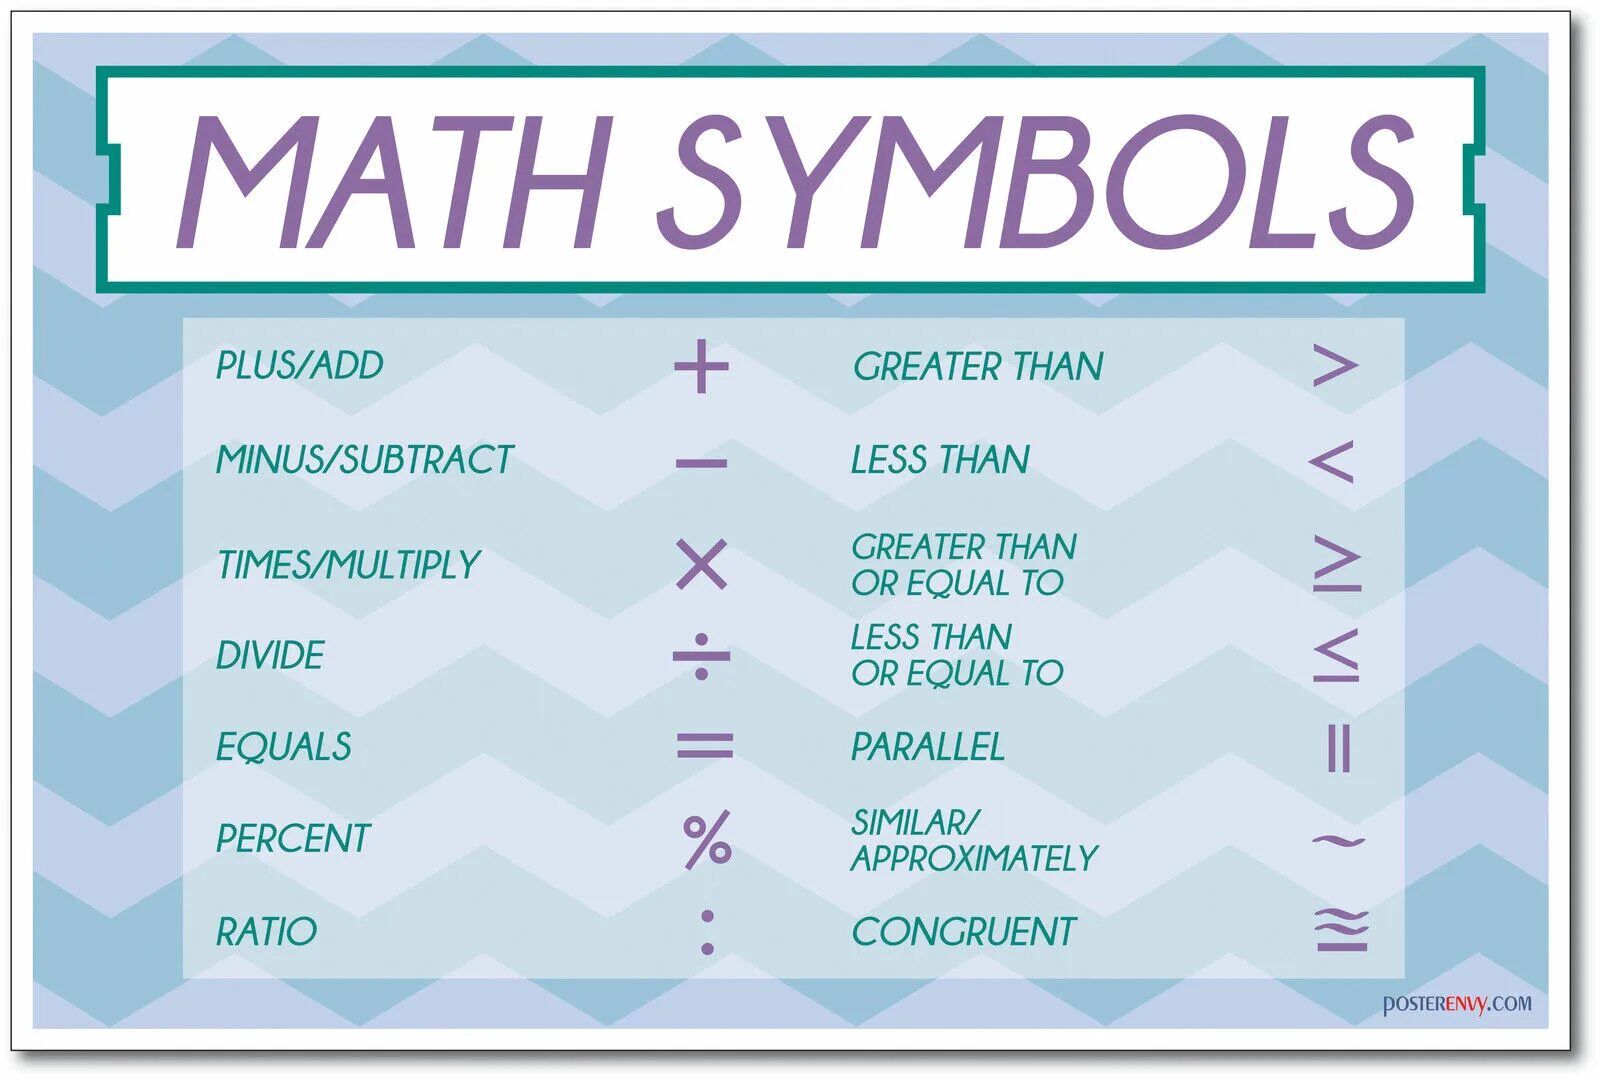 Как будет по английски математик. Math symbols. Mathematical symbols. Математические символы. Mathematical symbols in English.